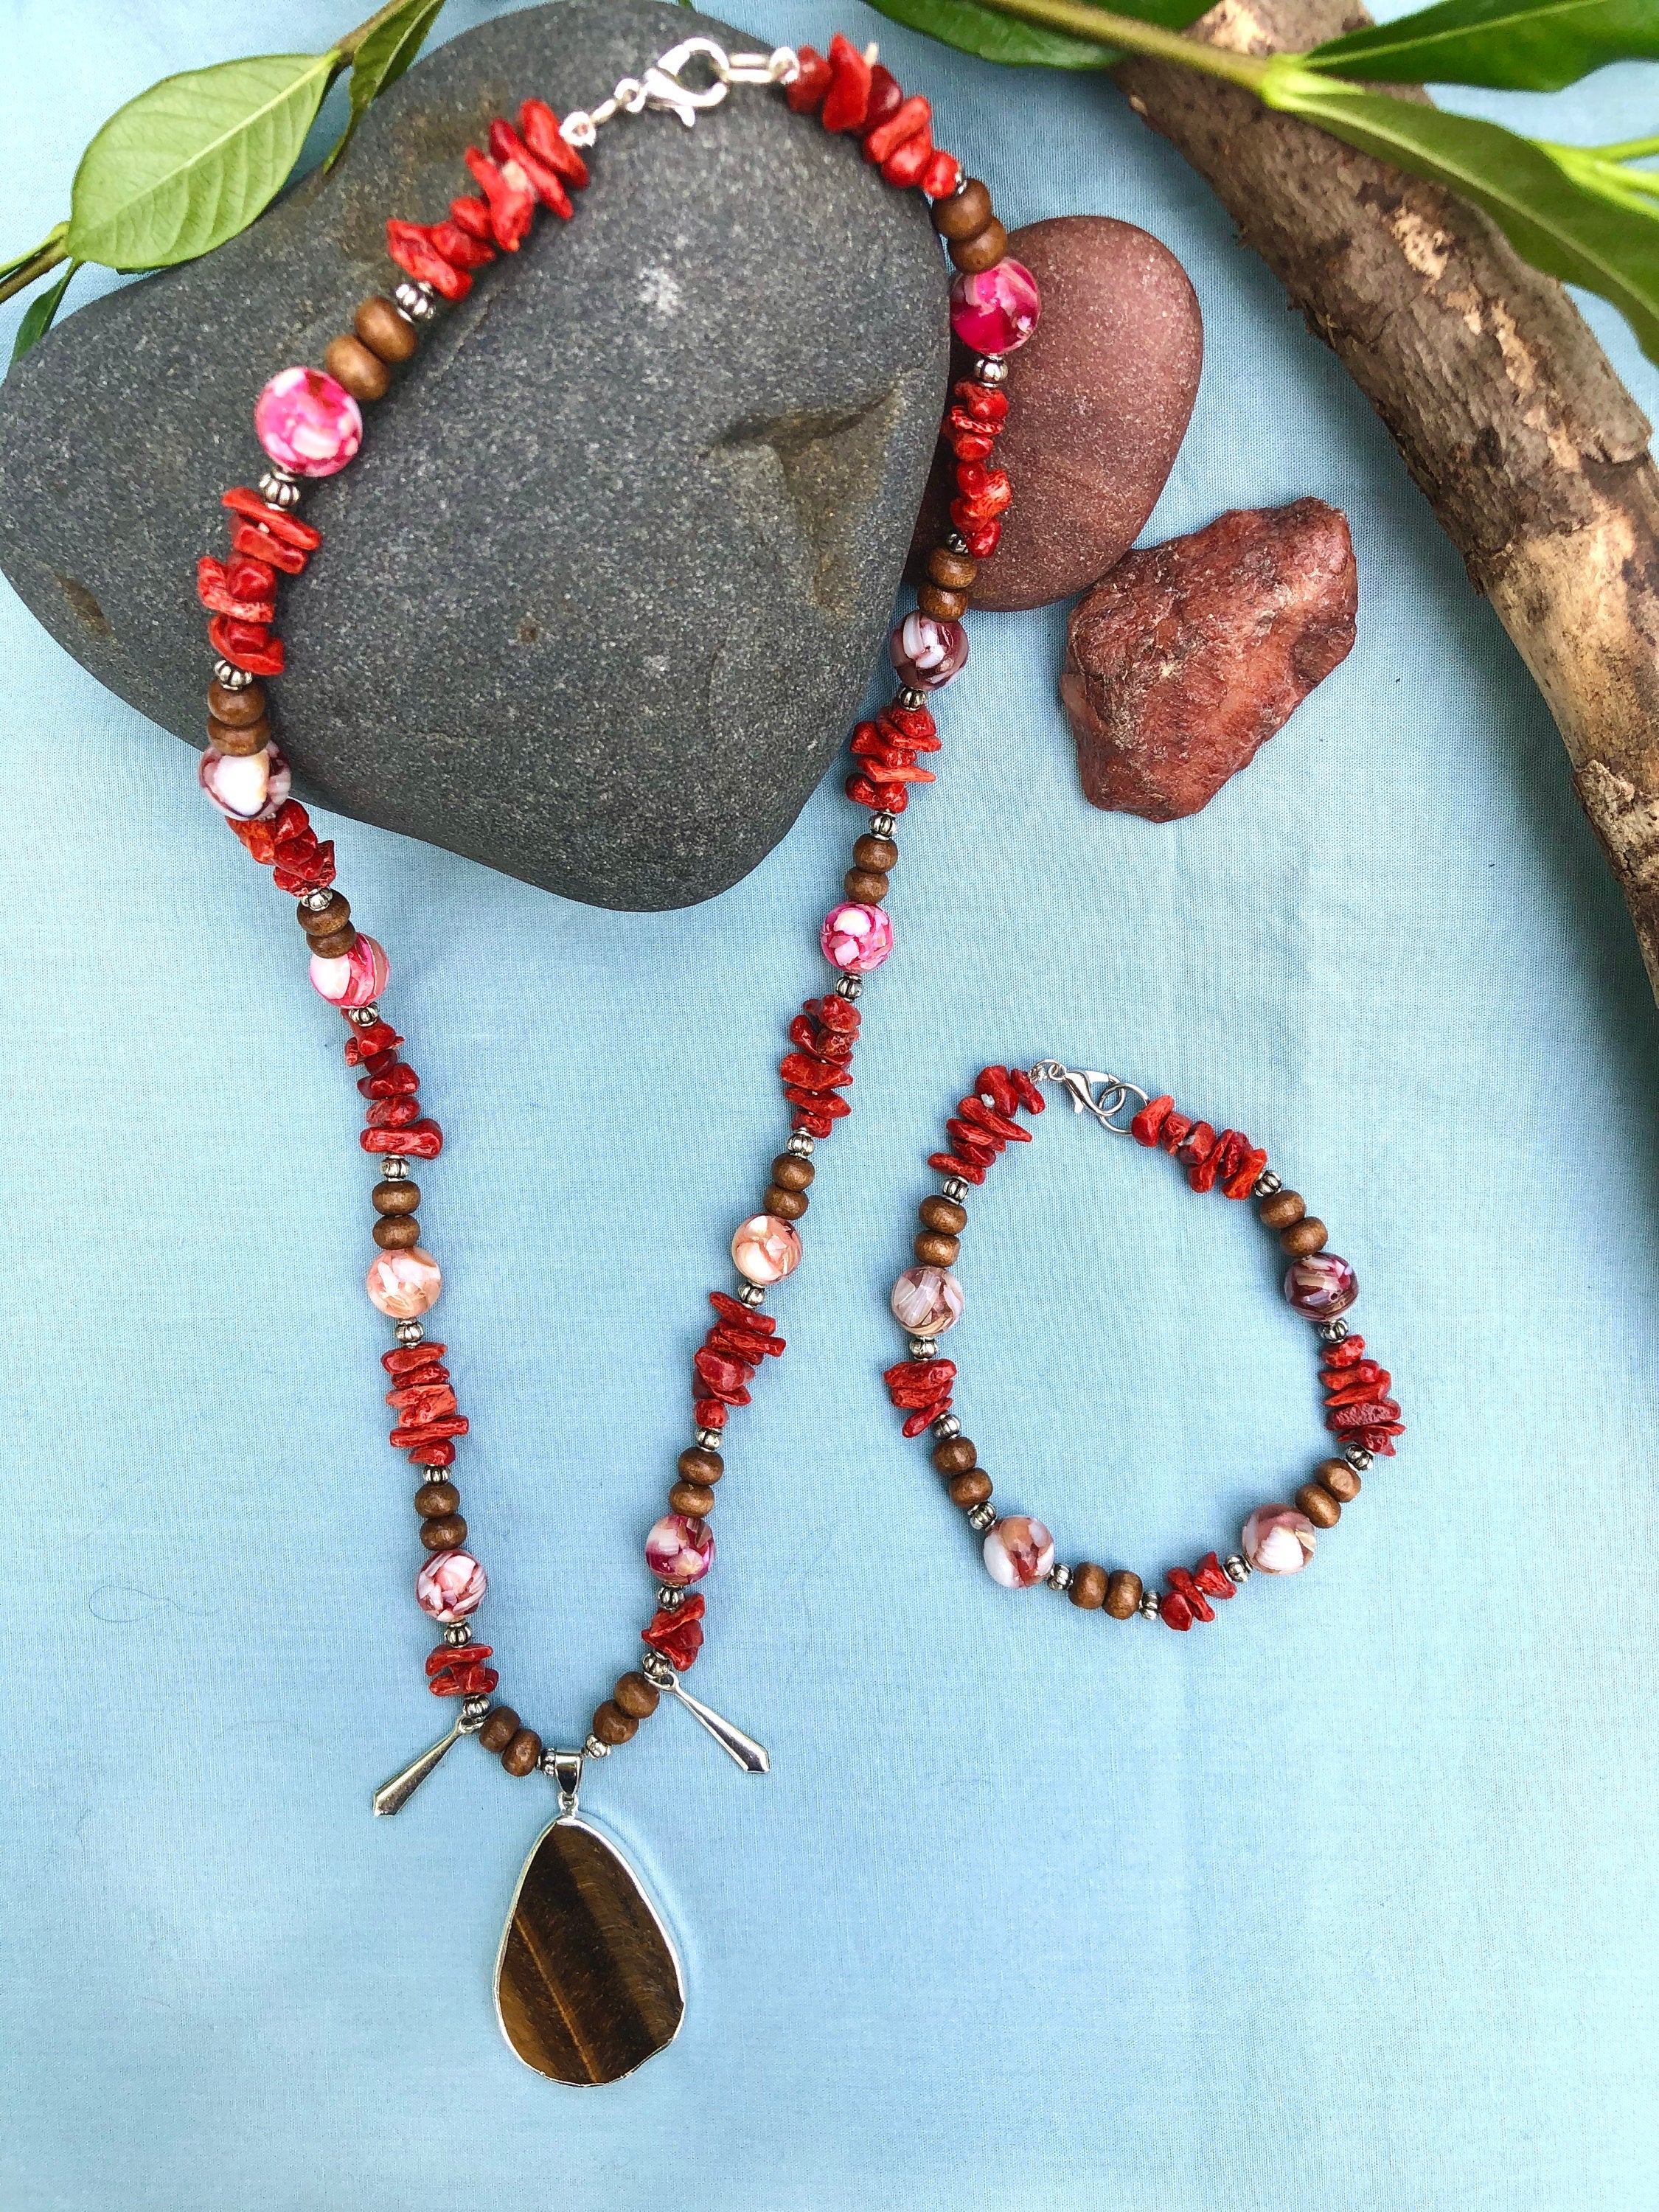 Chakra Healing "Goddess' Sight" Necklace & Bracelet | Tiger Eye Mother of Pearl Sponge Coral | Healing Energy Meditation Beach Jewelry - Mama’s Malas jewelry